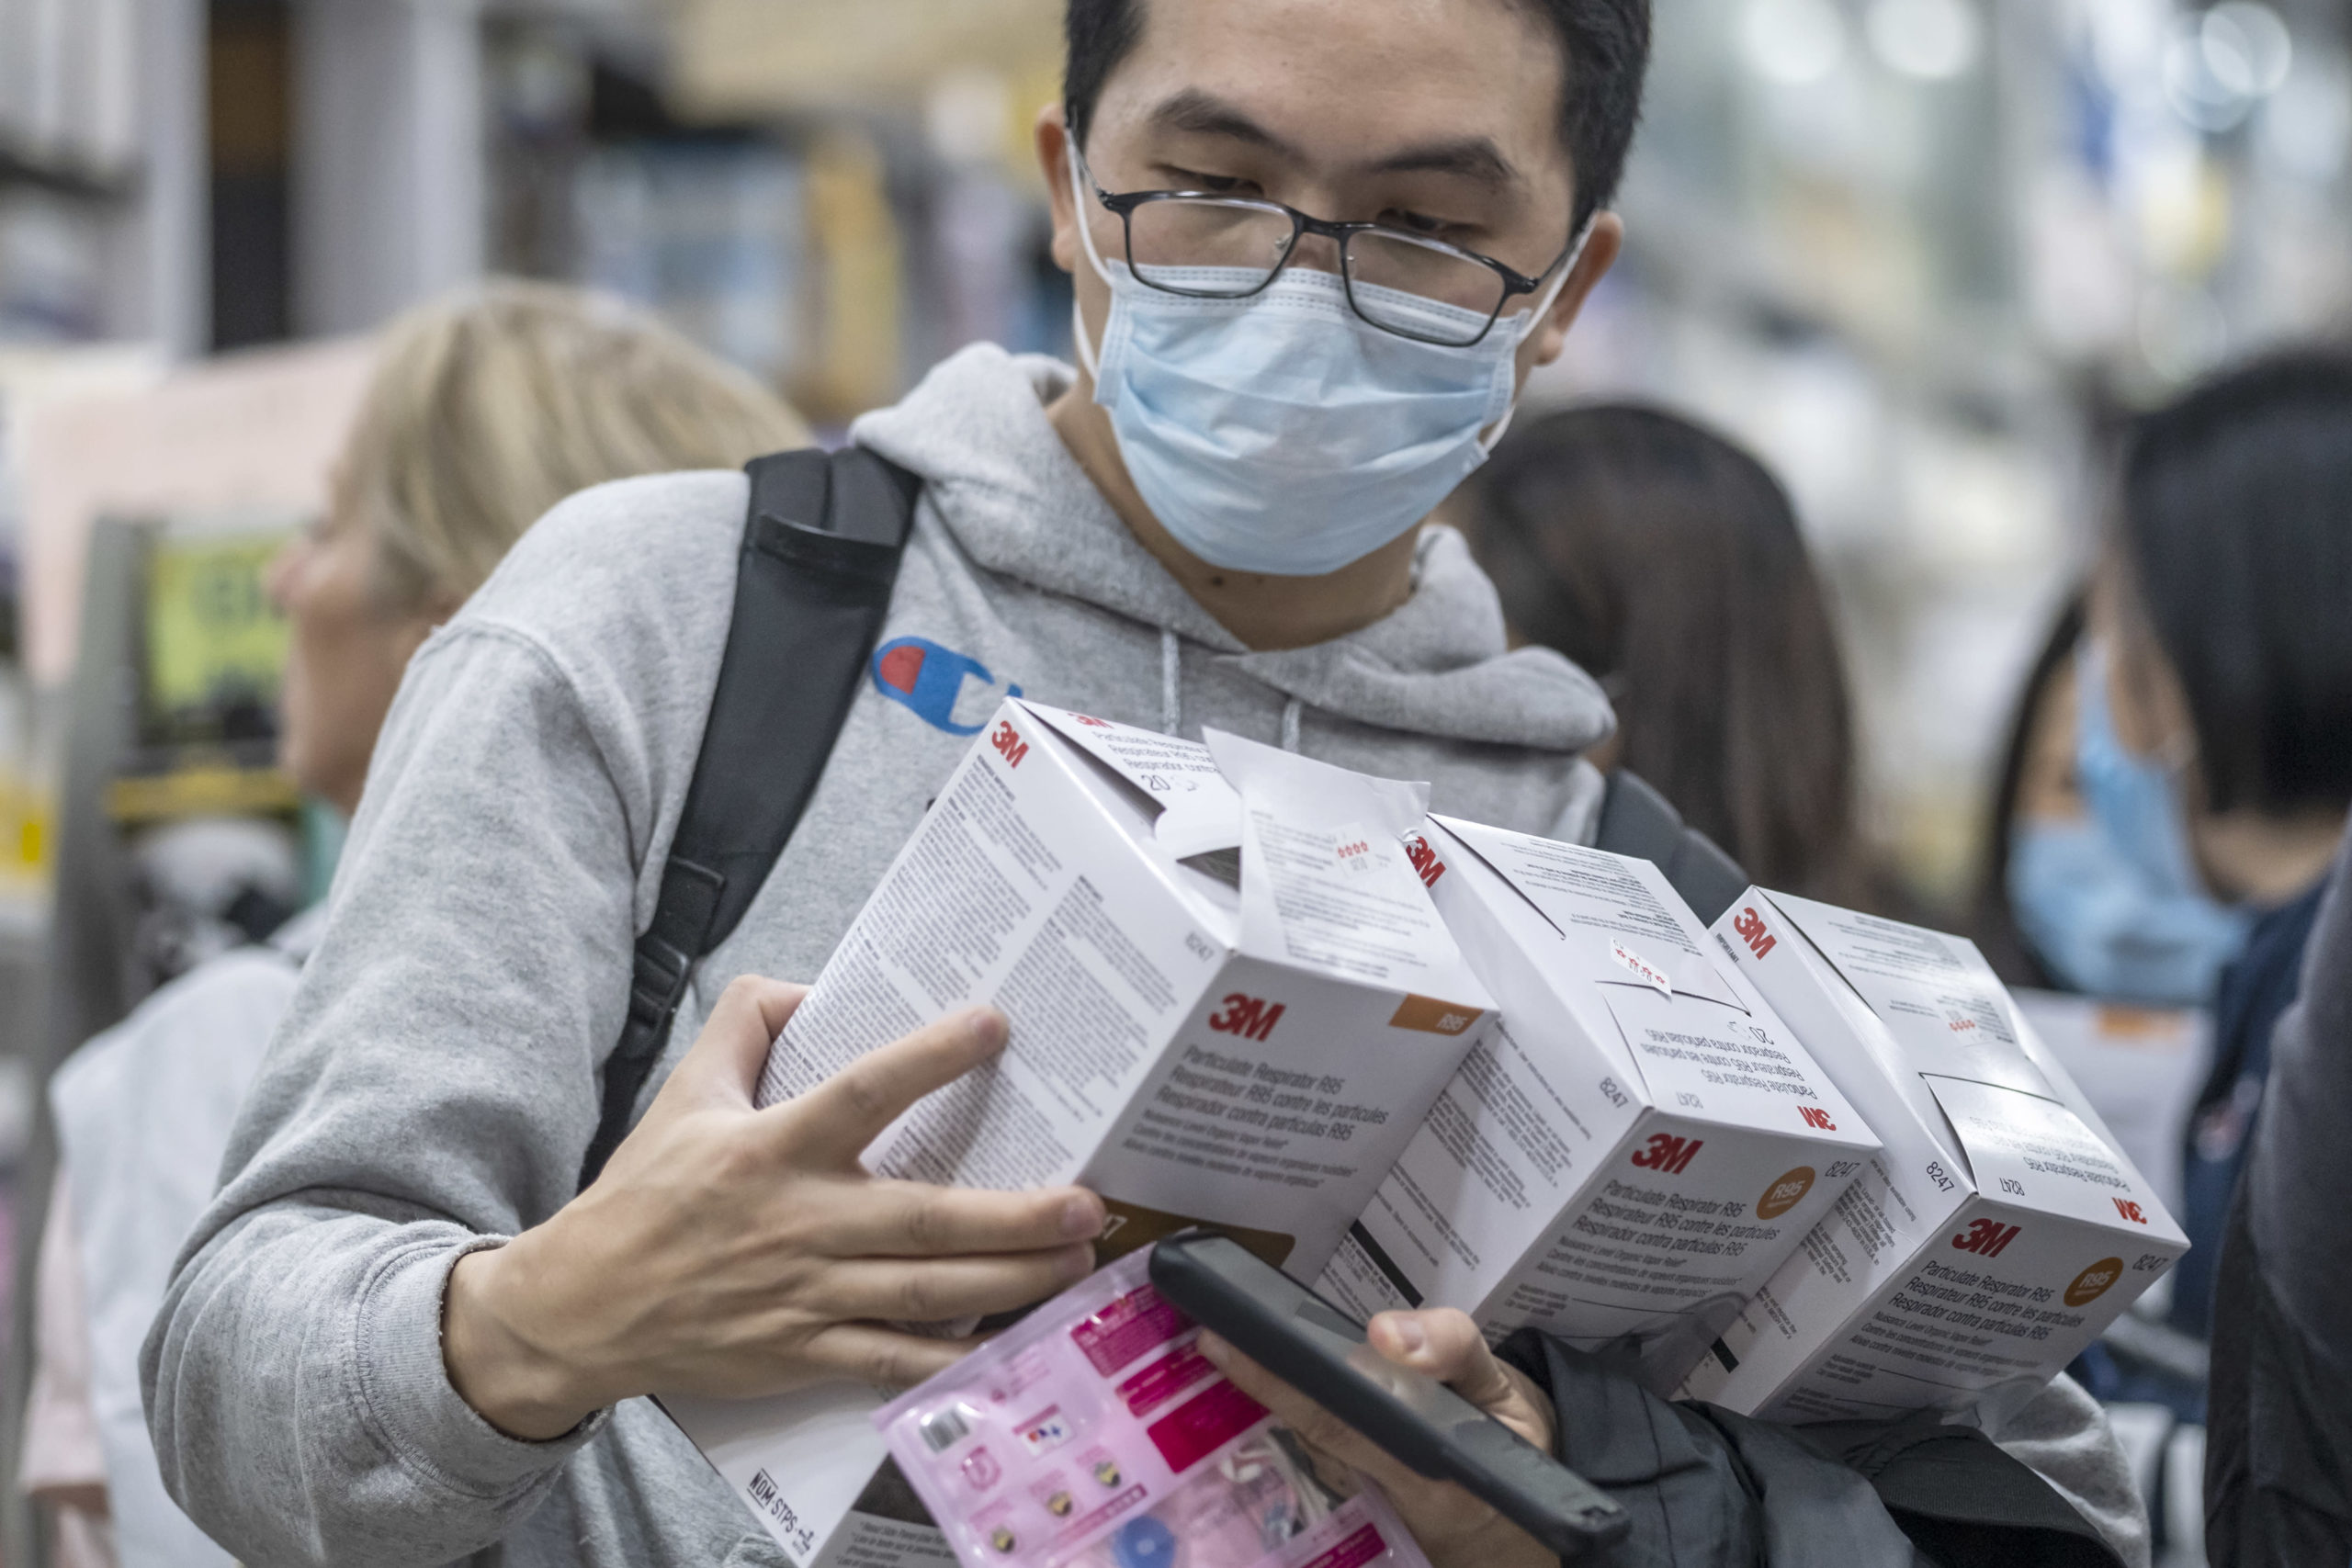 3M ramps up manufacturing of masks to fulfill coronavirus demand